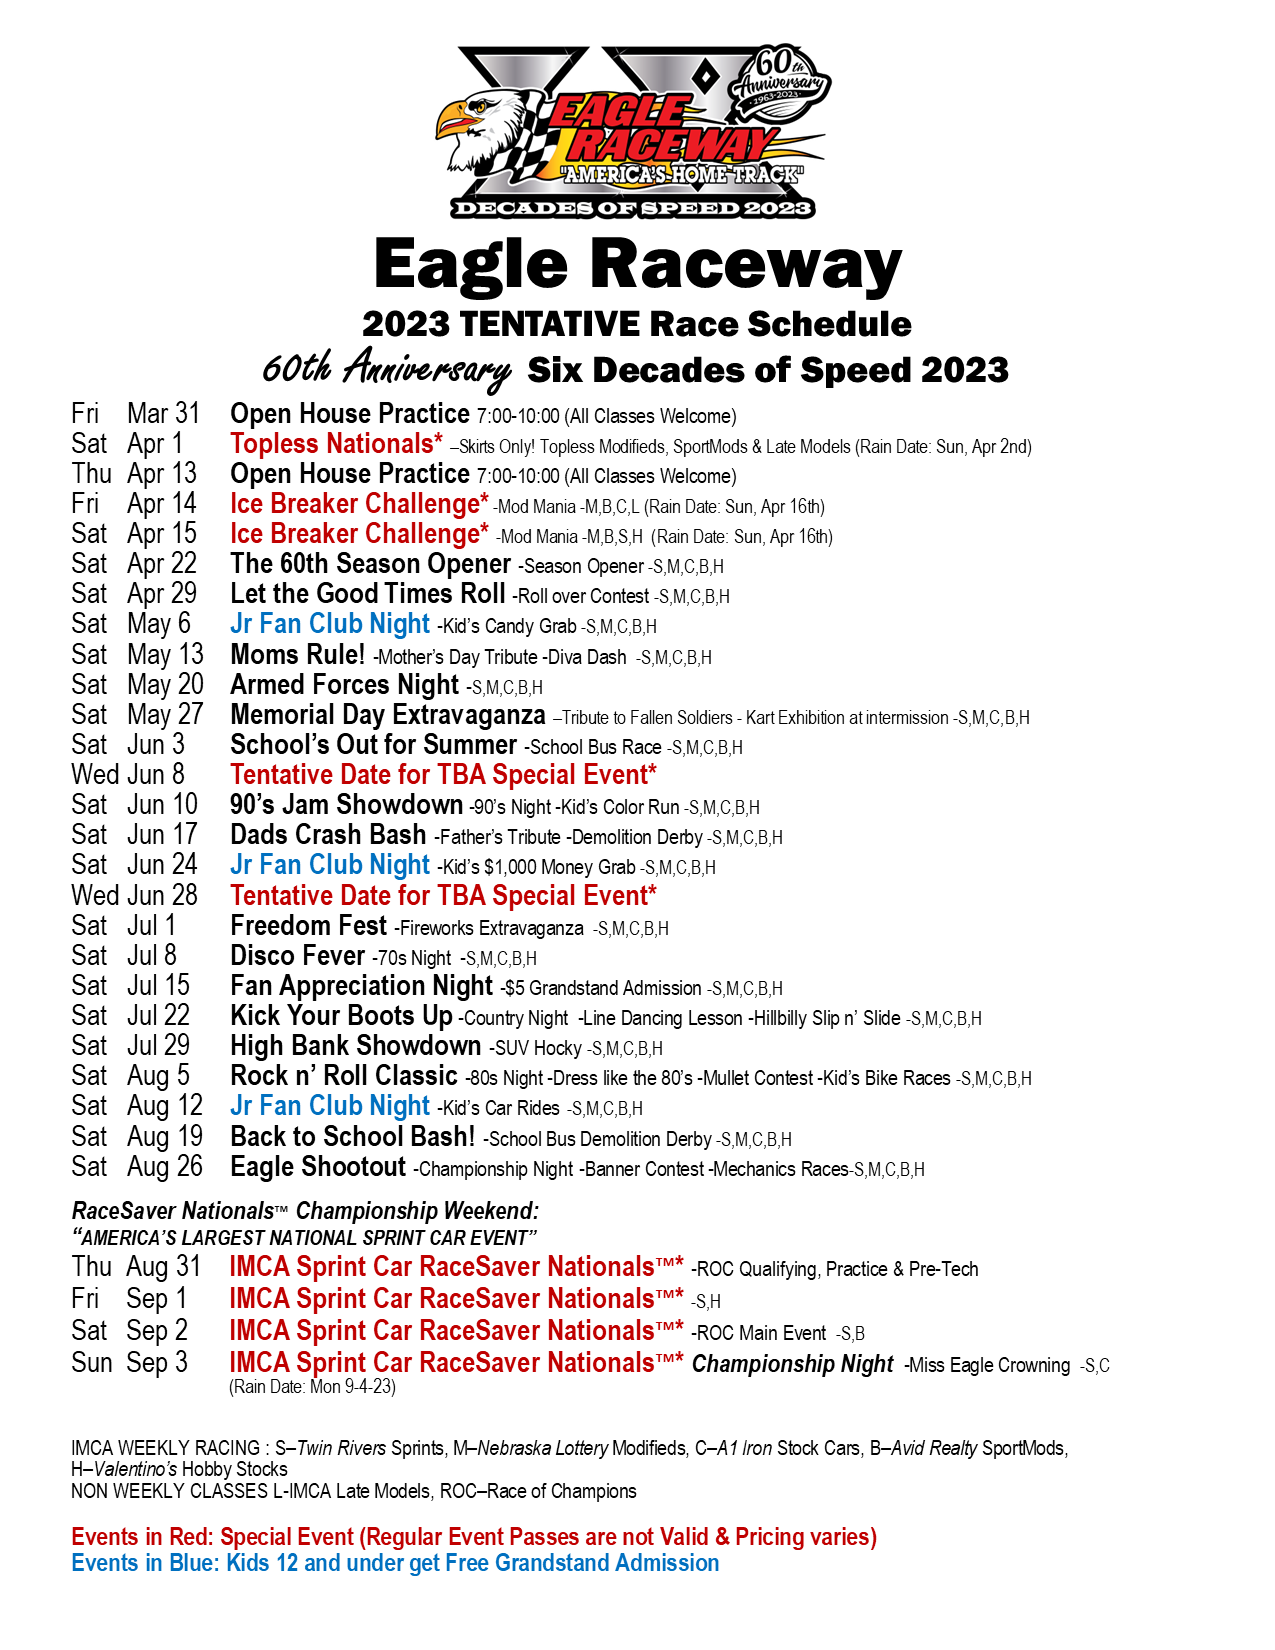 The Tentative 2023 Eagle Raceway Schedule has been released. - Eagle Raceway